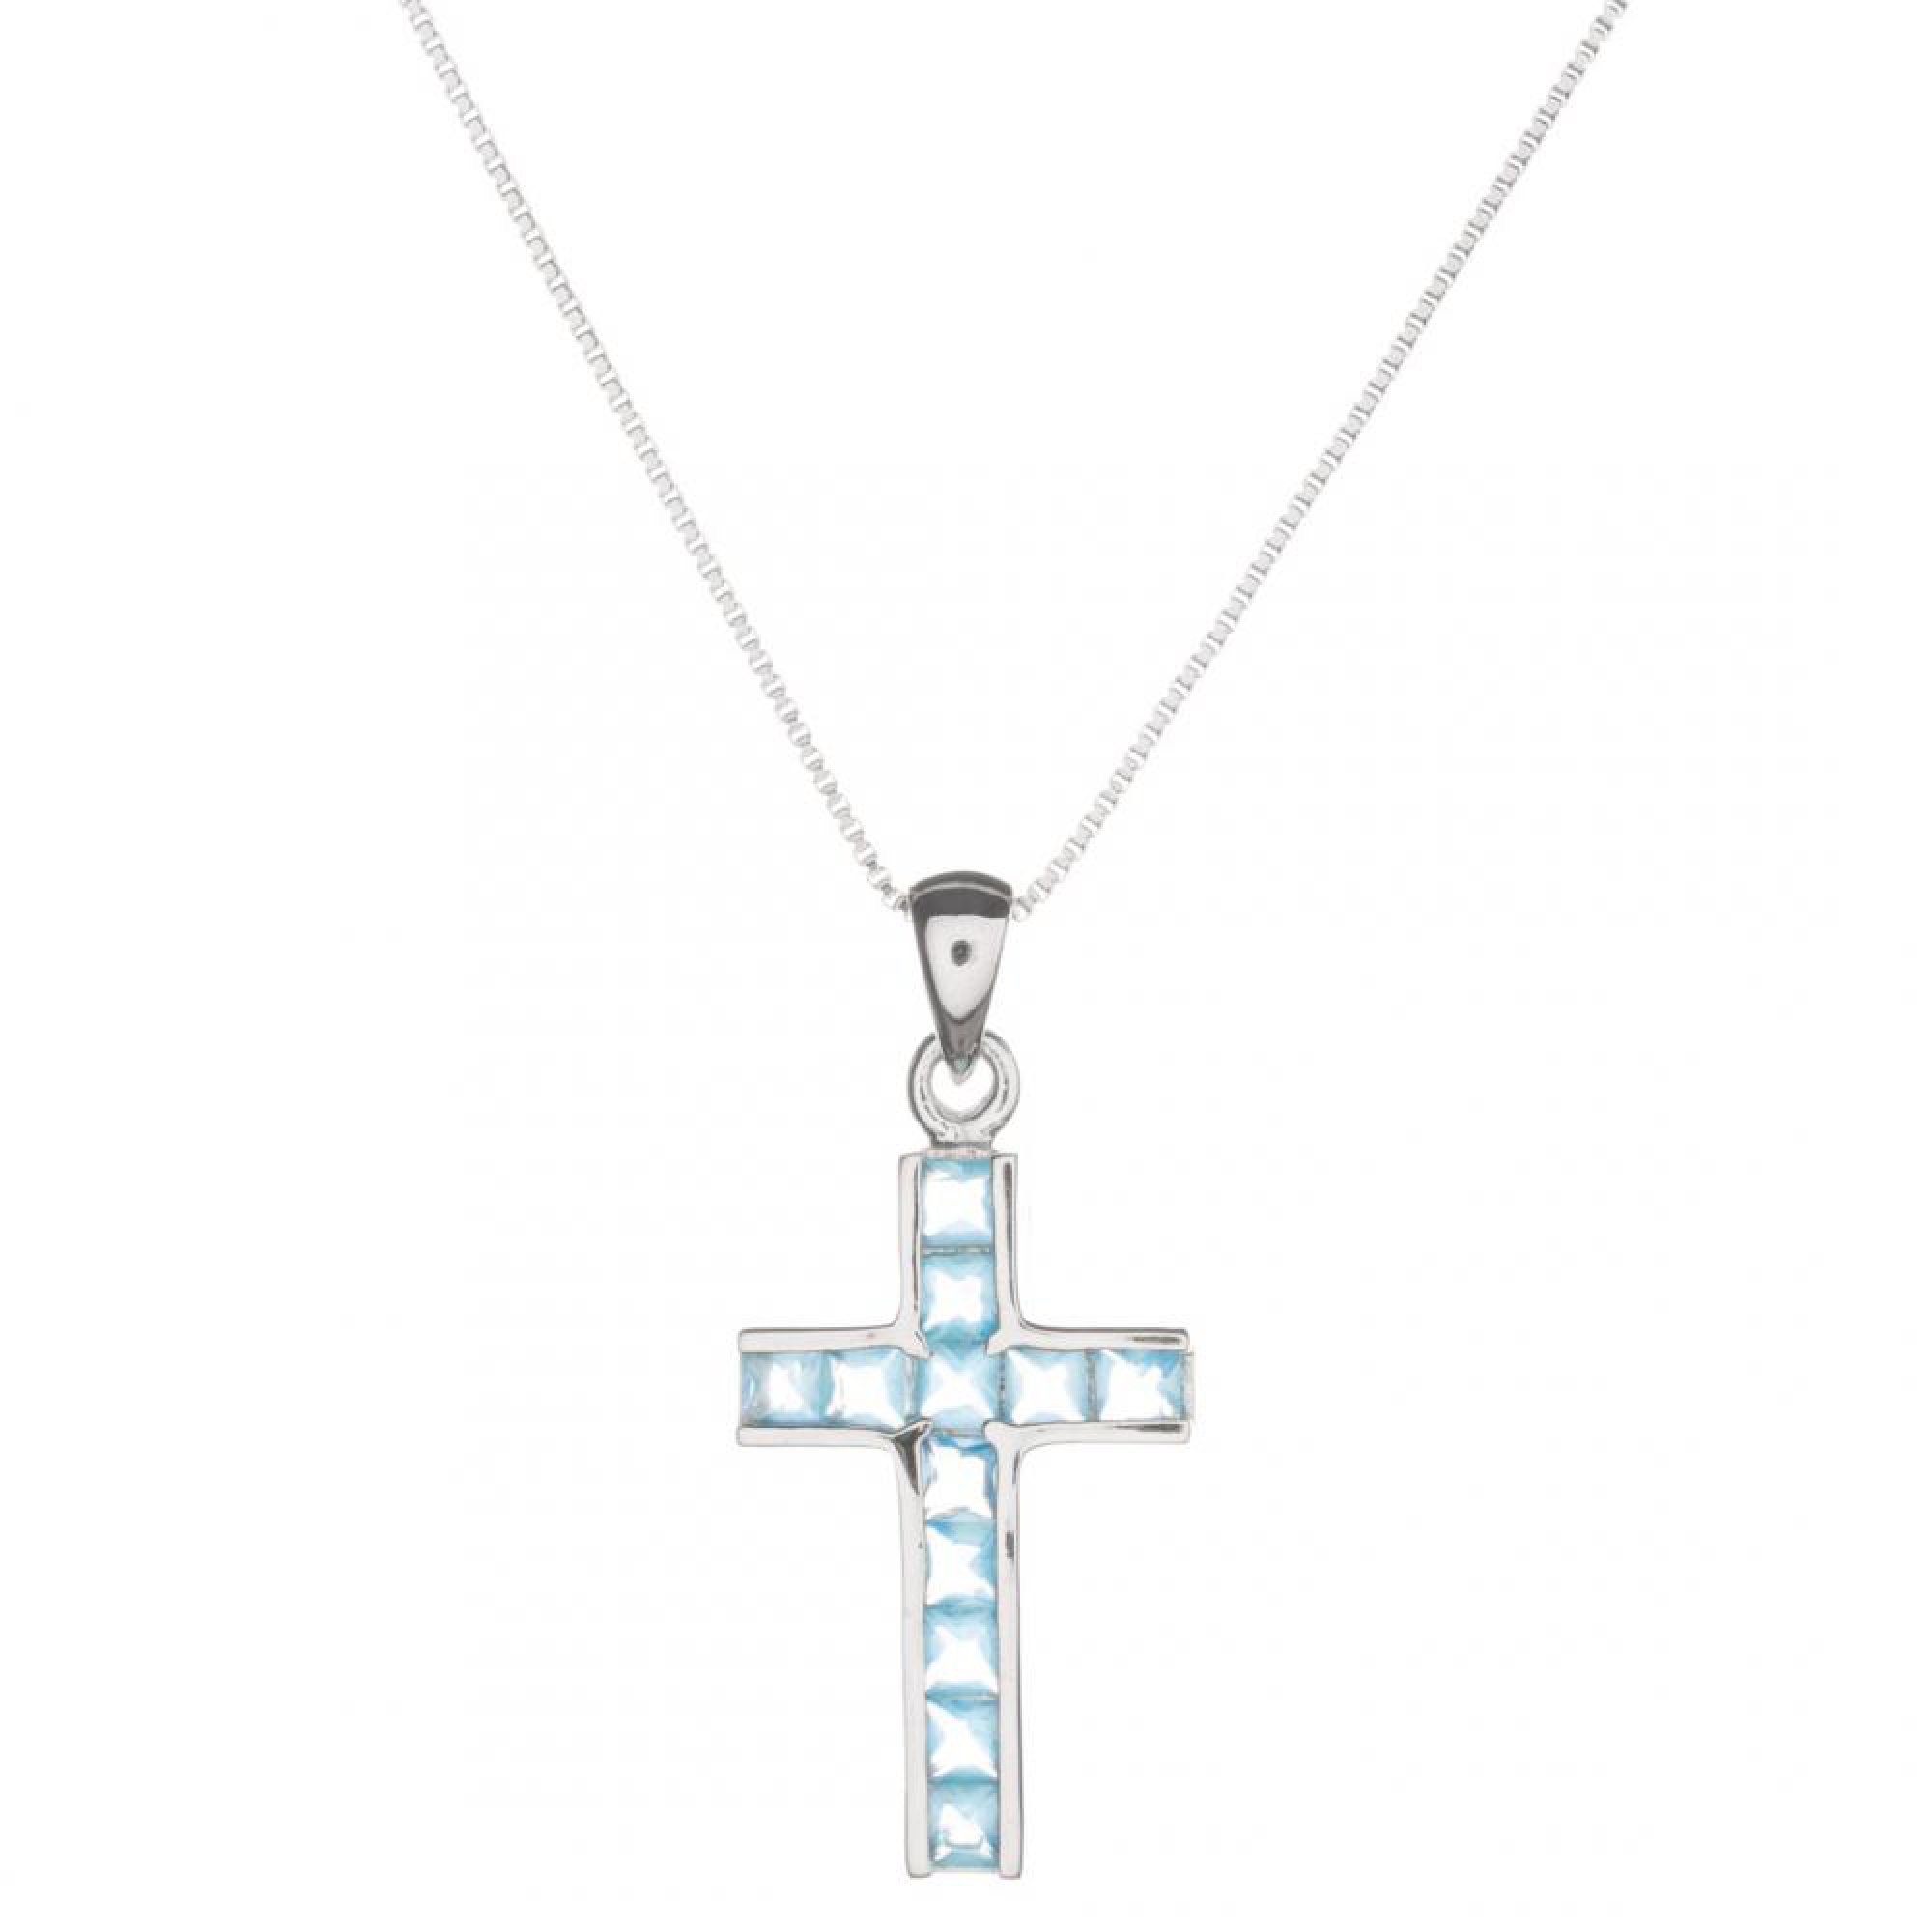 Cross necklace with aquamarine stones